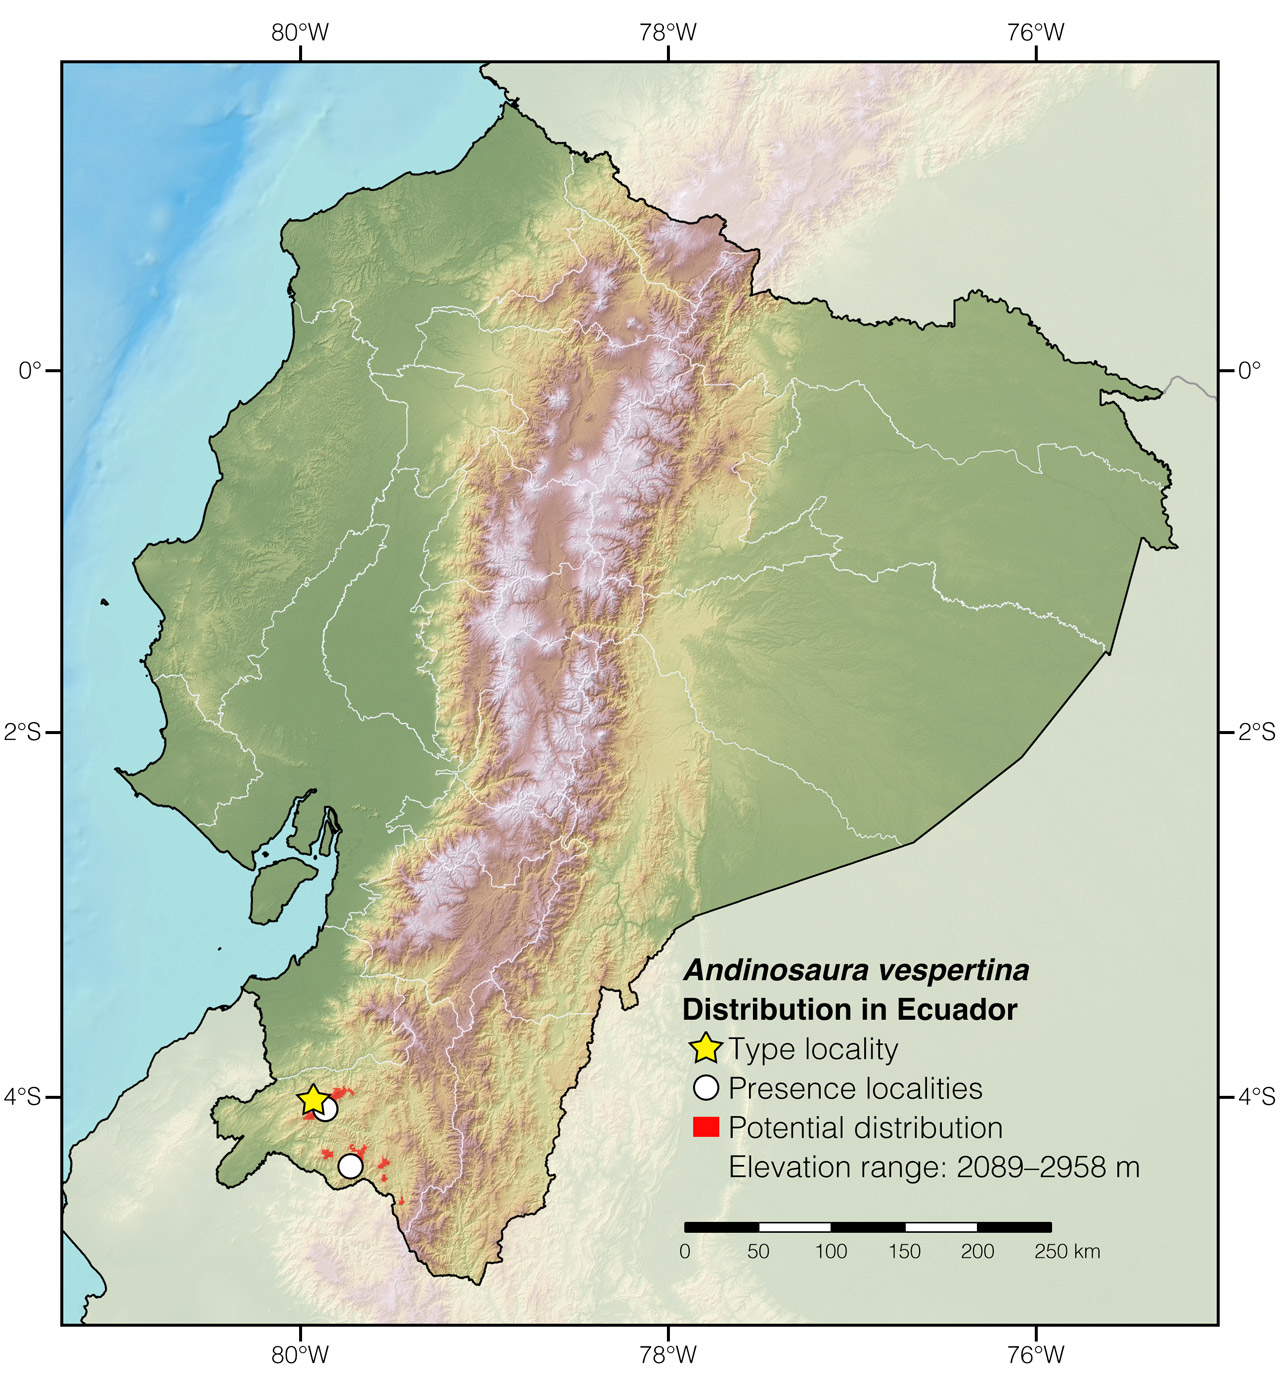 Distribution of Andinosaura vespertina in Ecuador